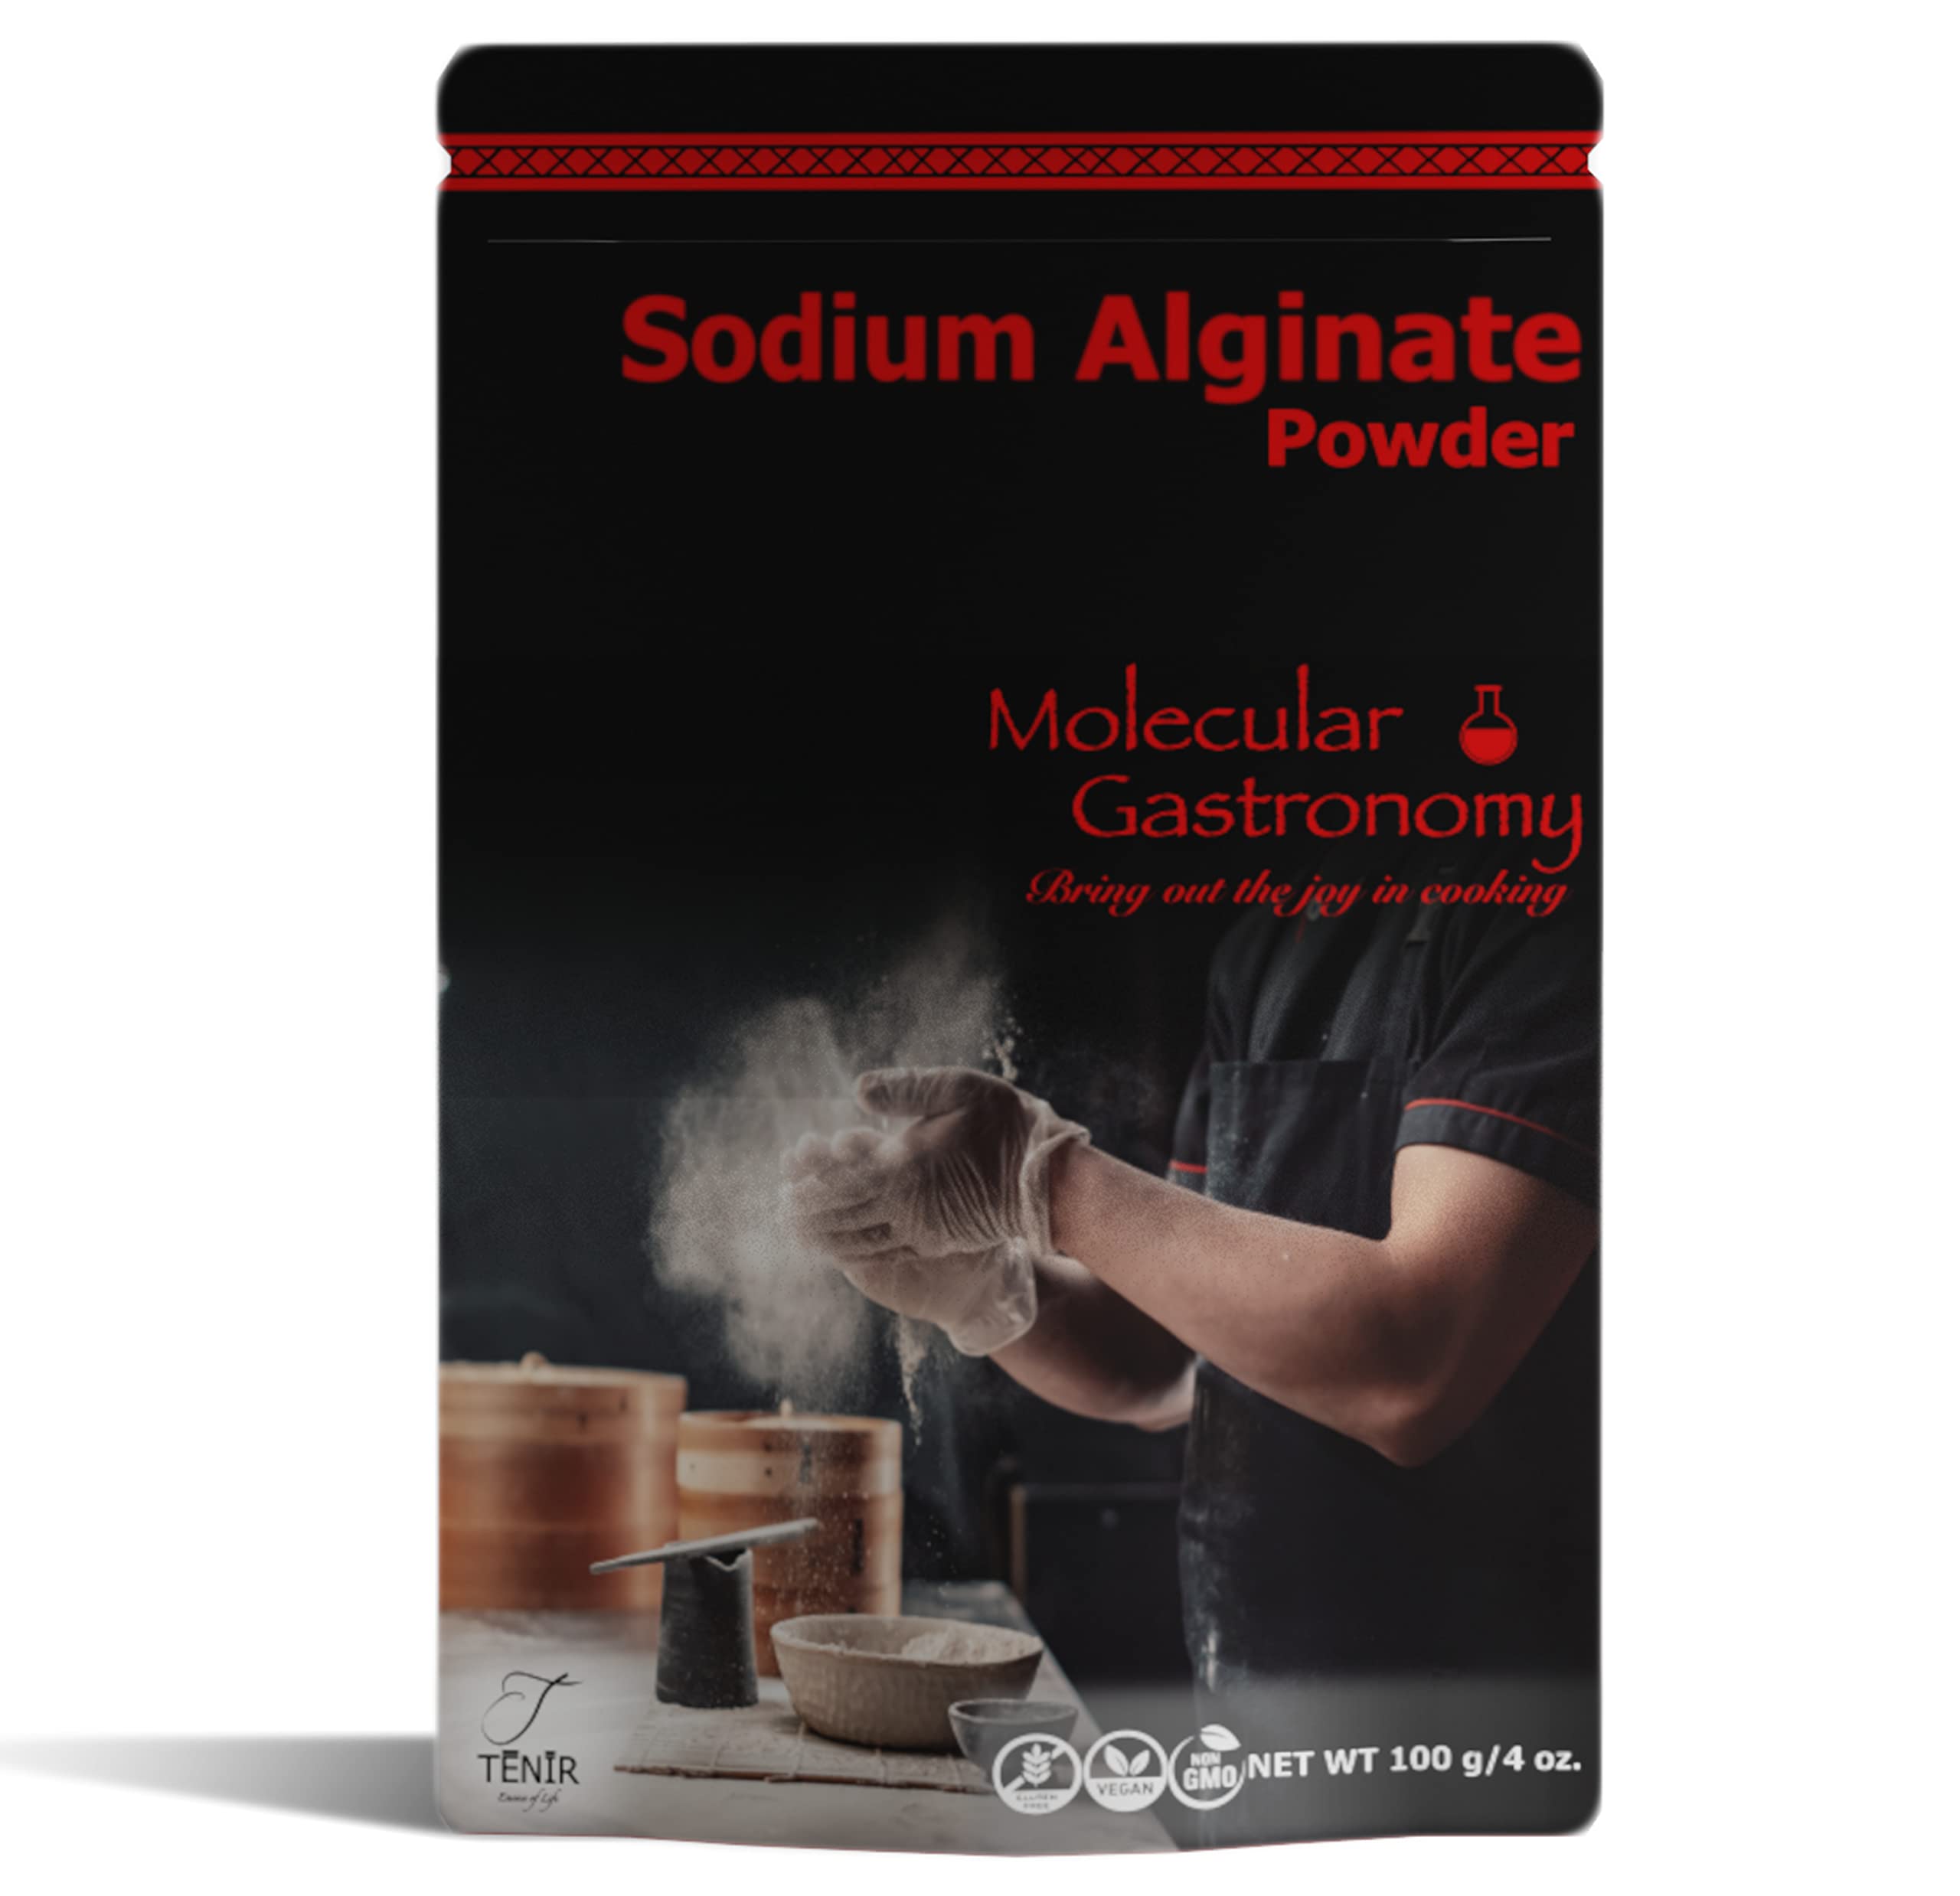  Sodium Alginate and Calcium Chloride – Spherification Value Kit  - Practice Molecular Gastronomy, 4-Oz. : Grocery & Gourmet Food